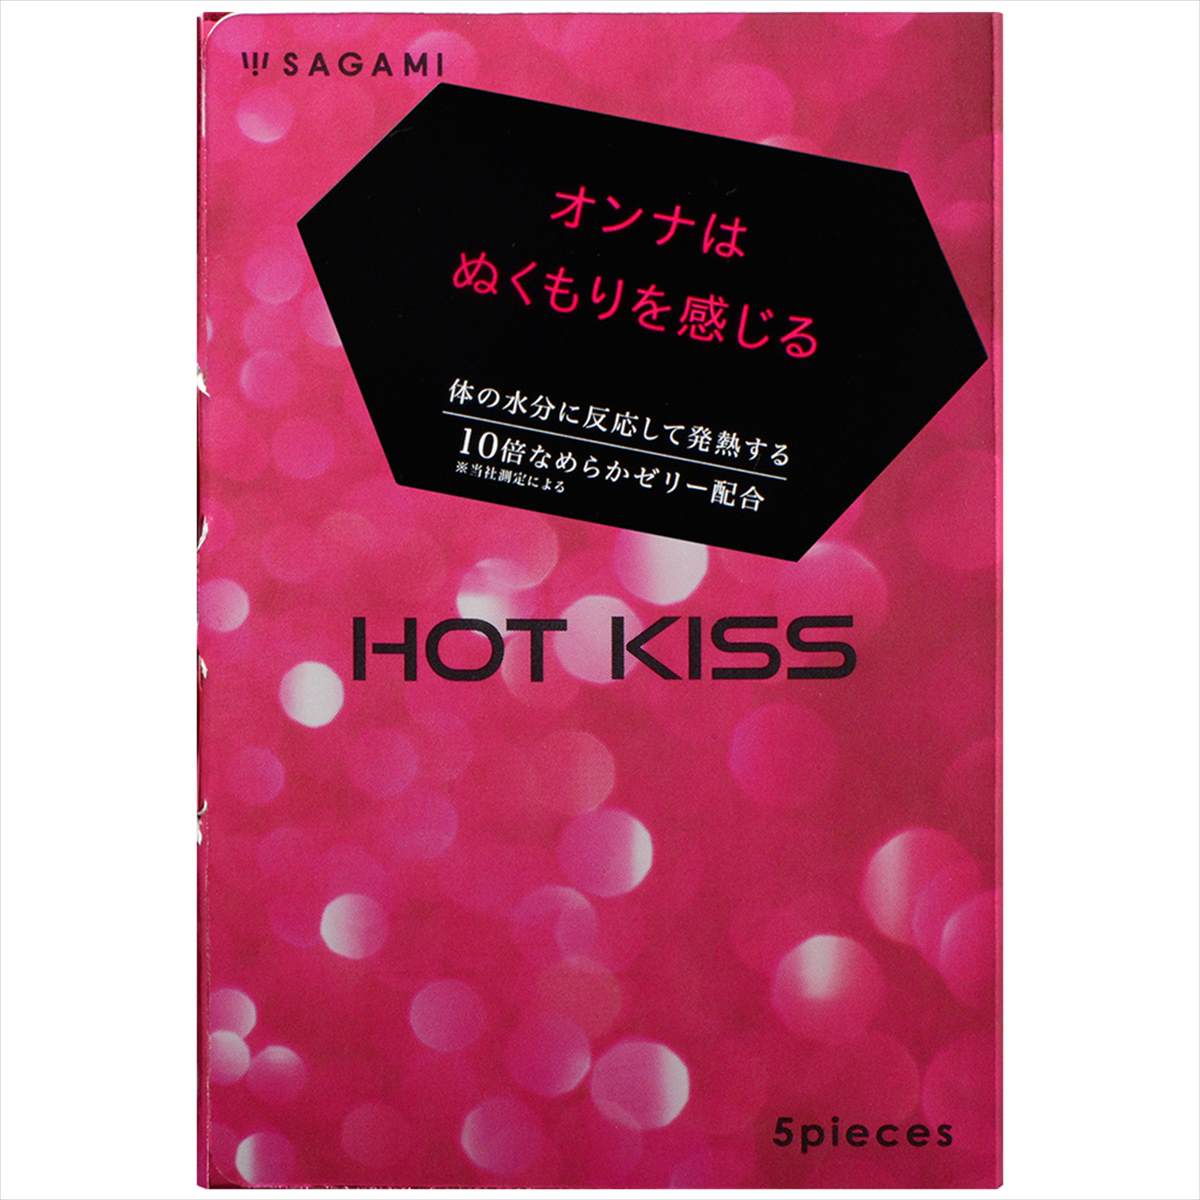 HOT KISS 5